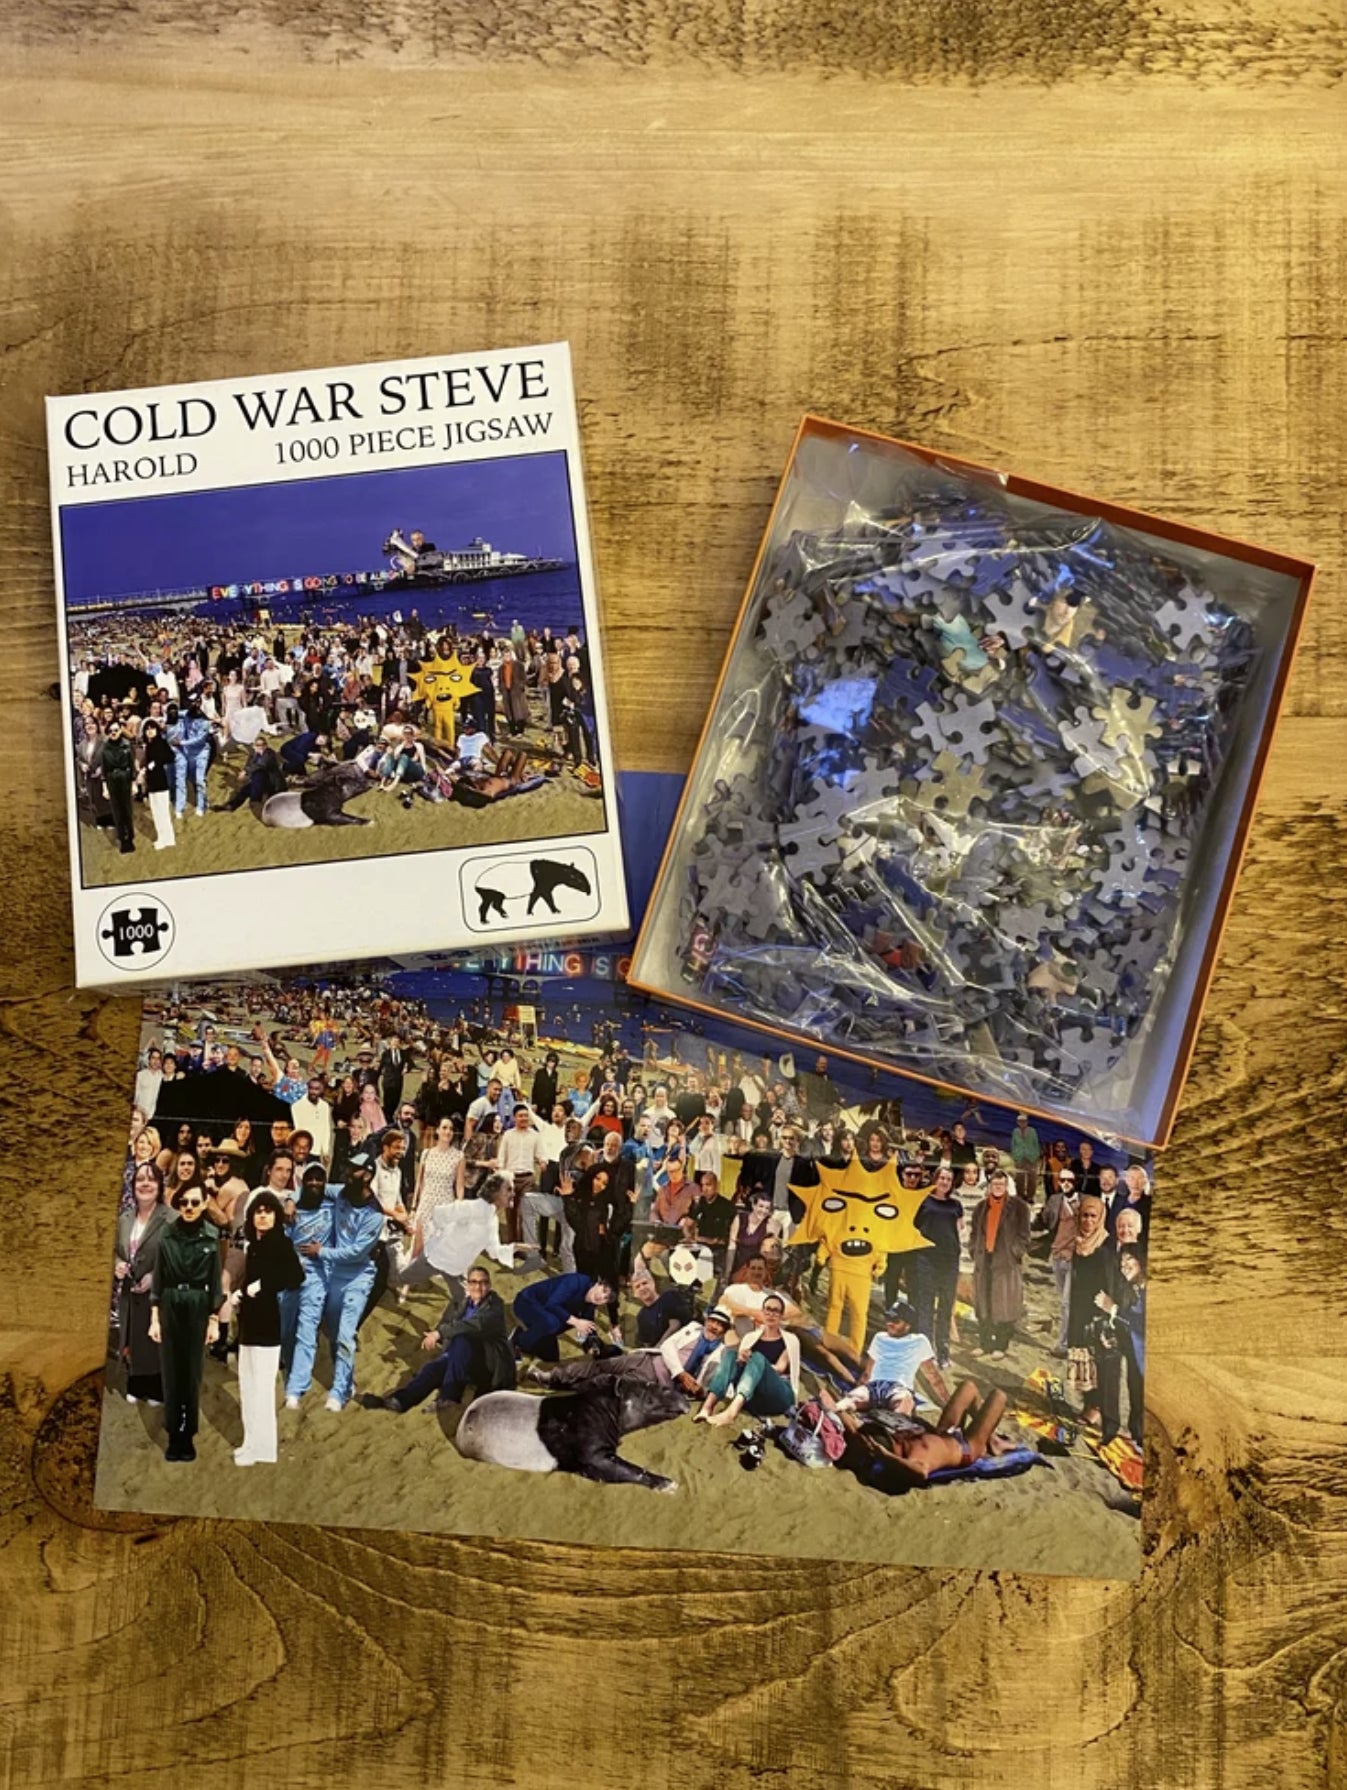 Cold War Steve 'Harold' 1000 Piece Jigsaw